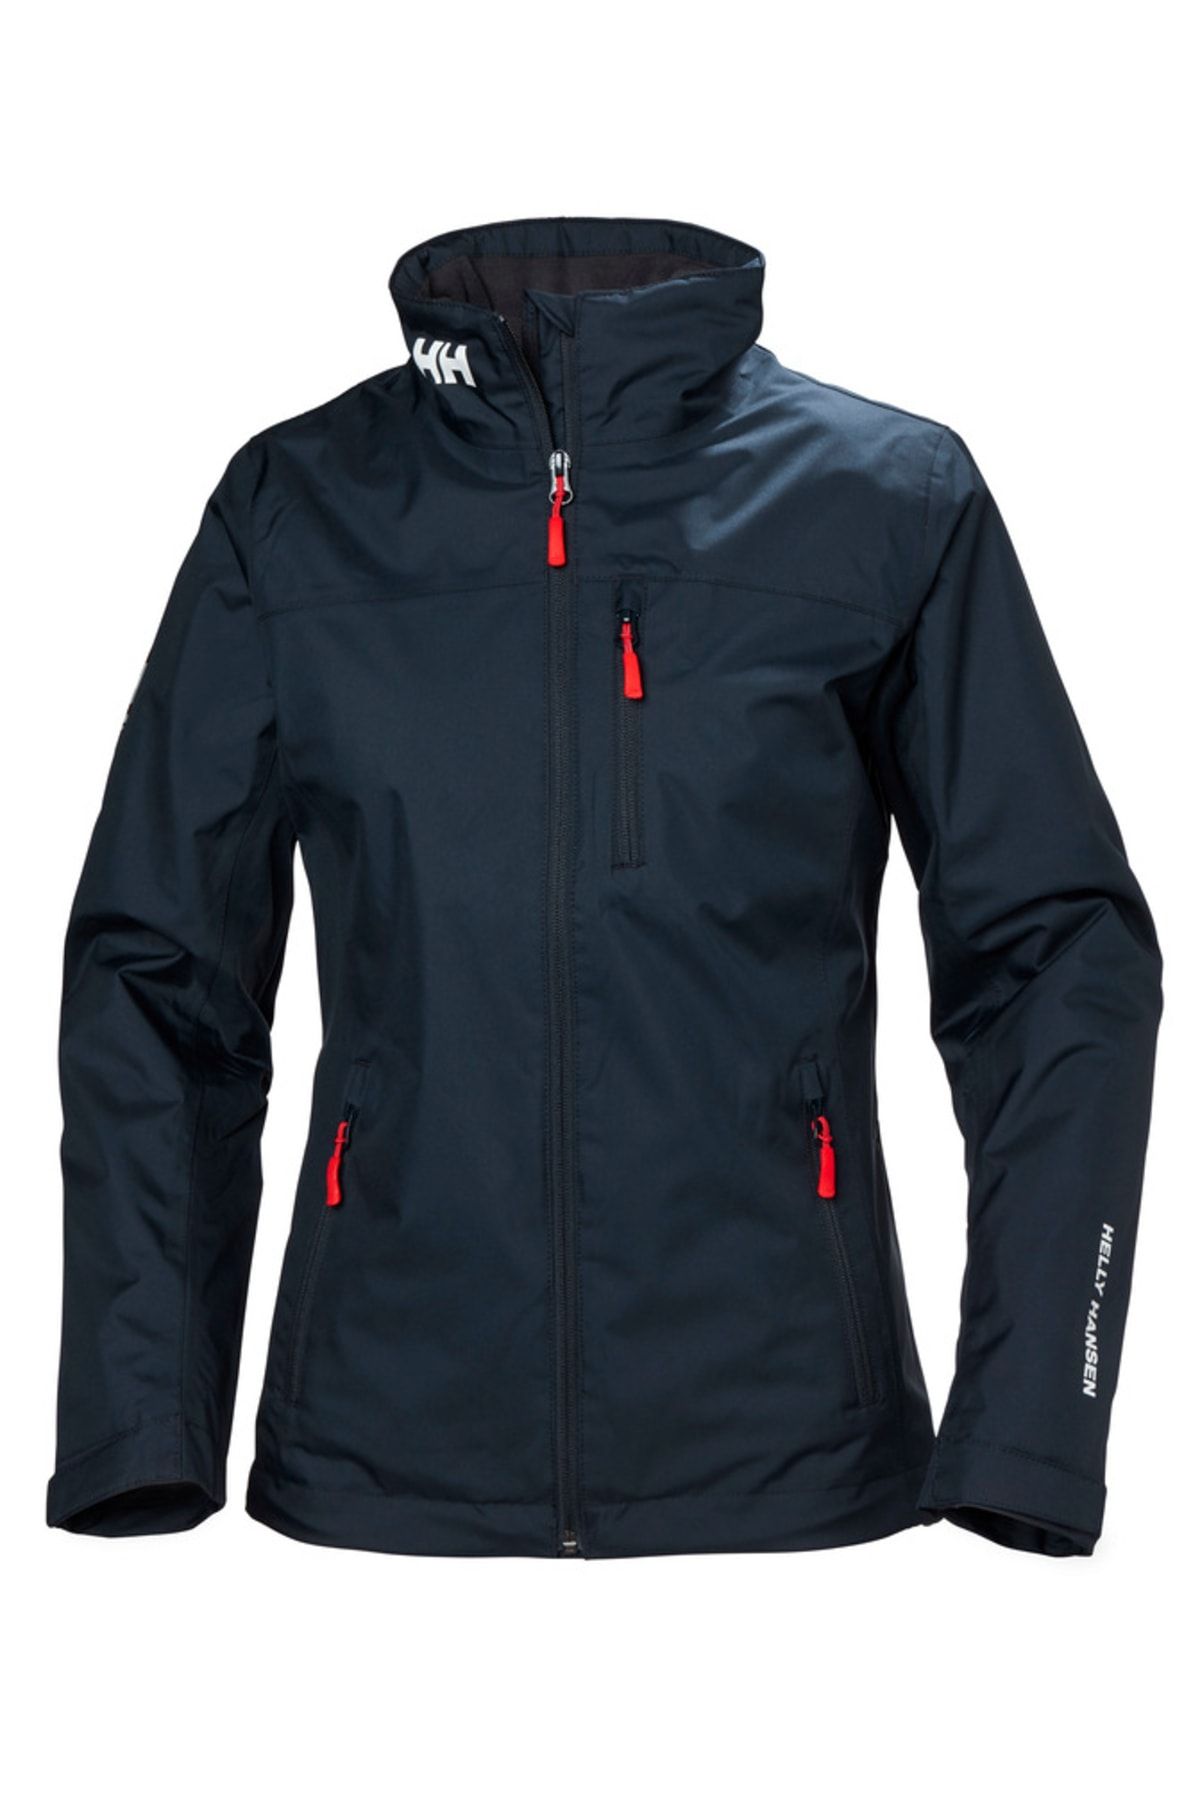 Helly Hansen Hh W Crew Mıdlayer Jacket - Hh Polar Kaplamalı Kadın Outdoor Ceket